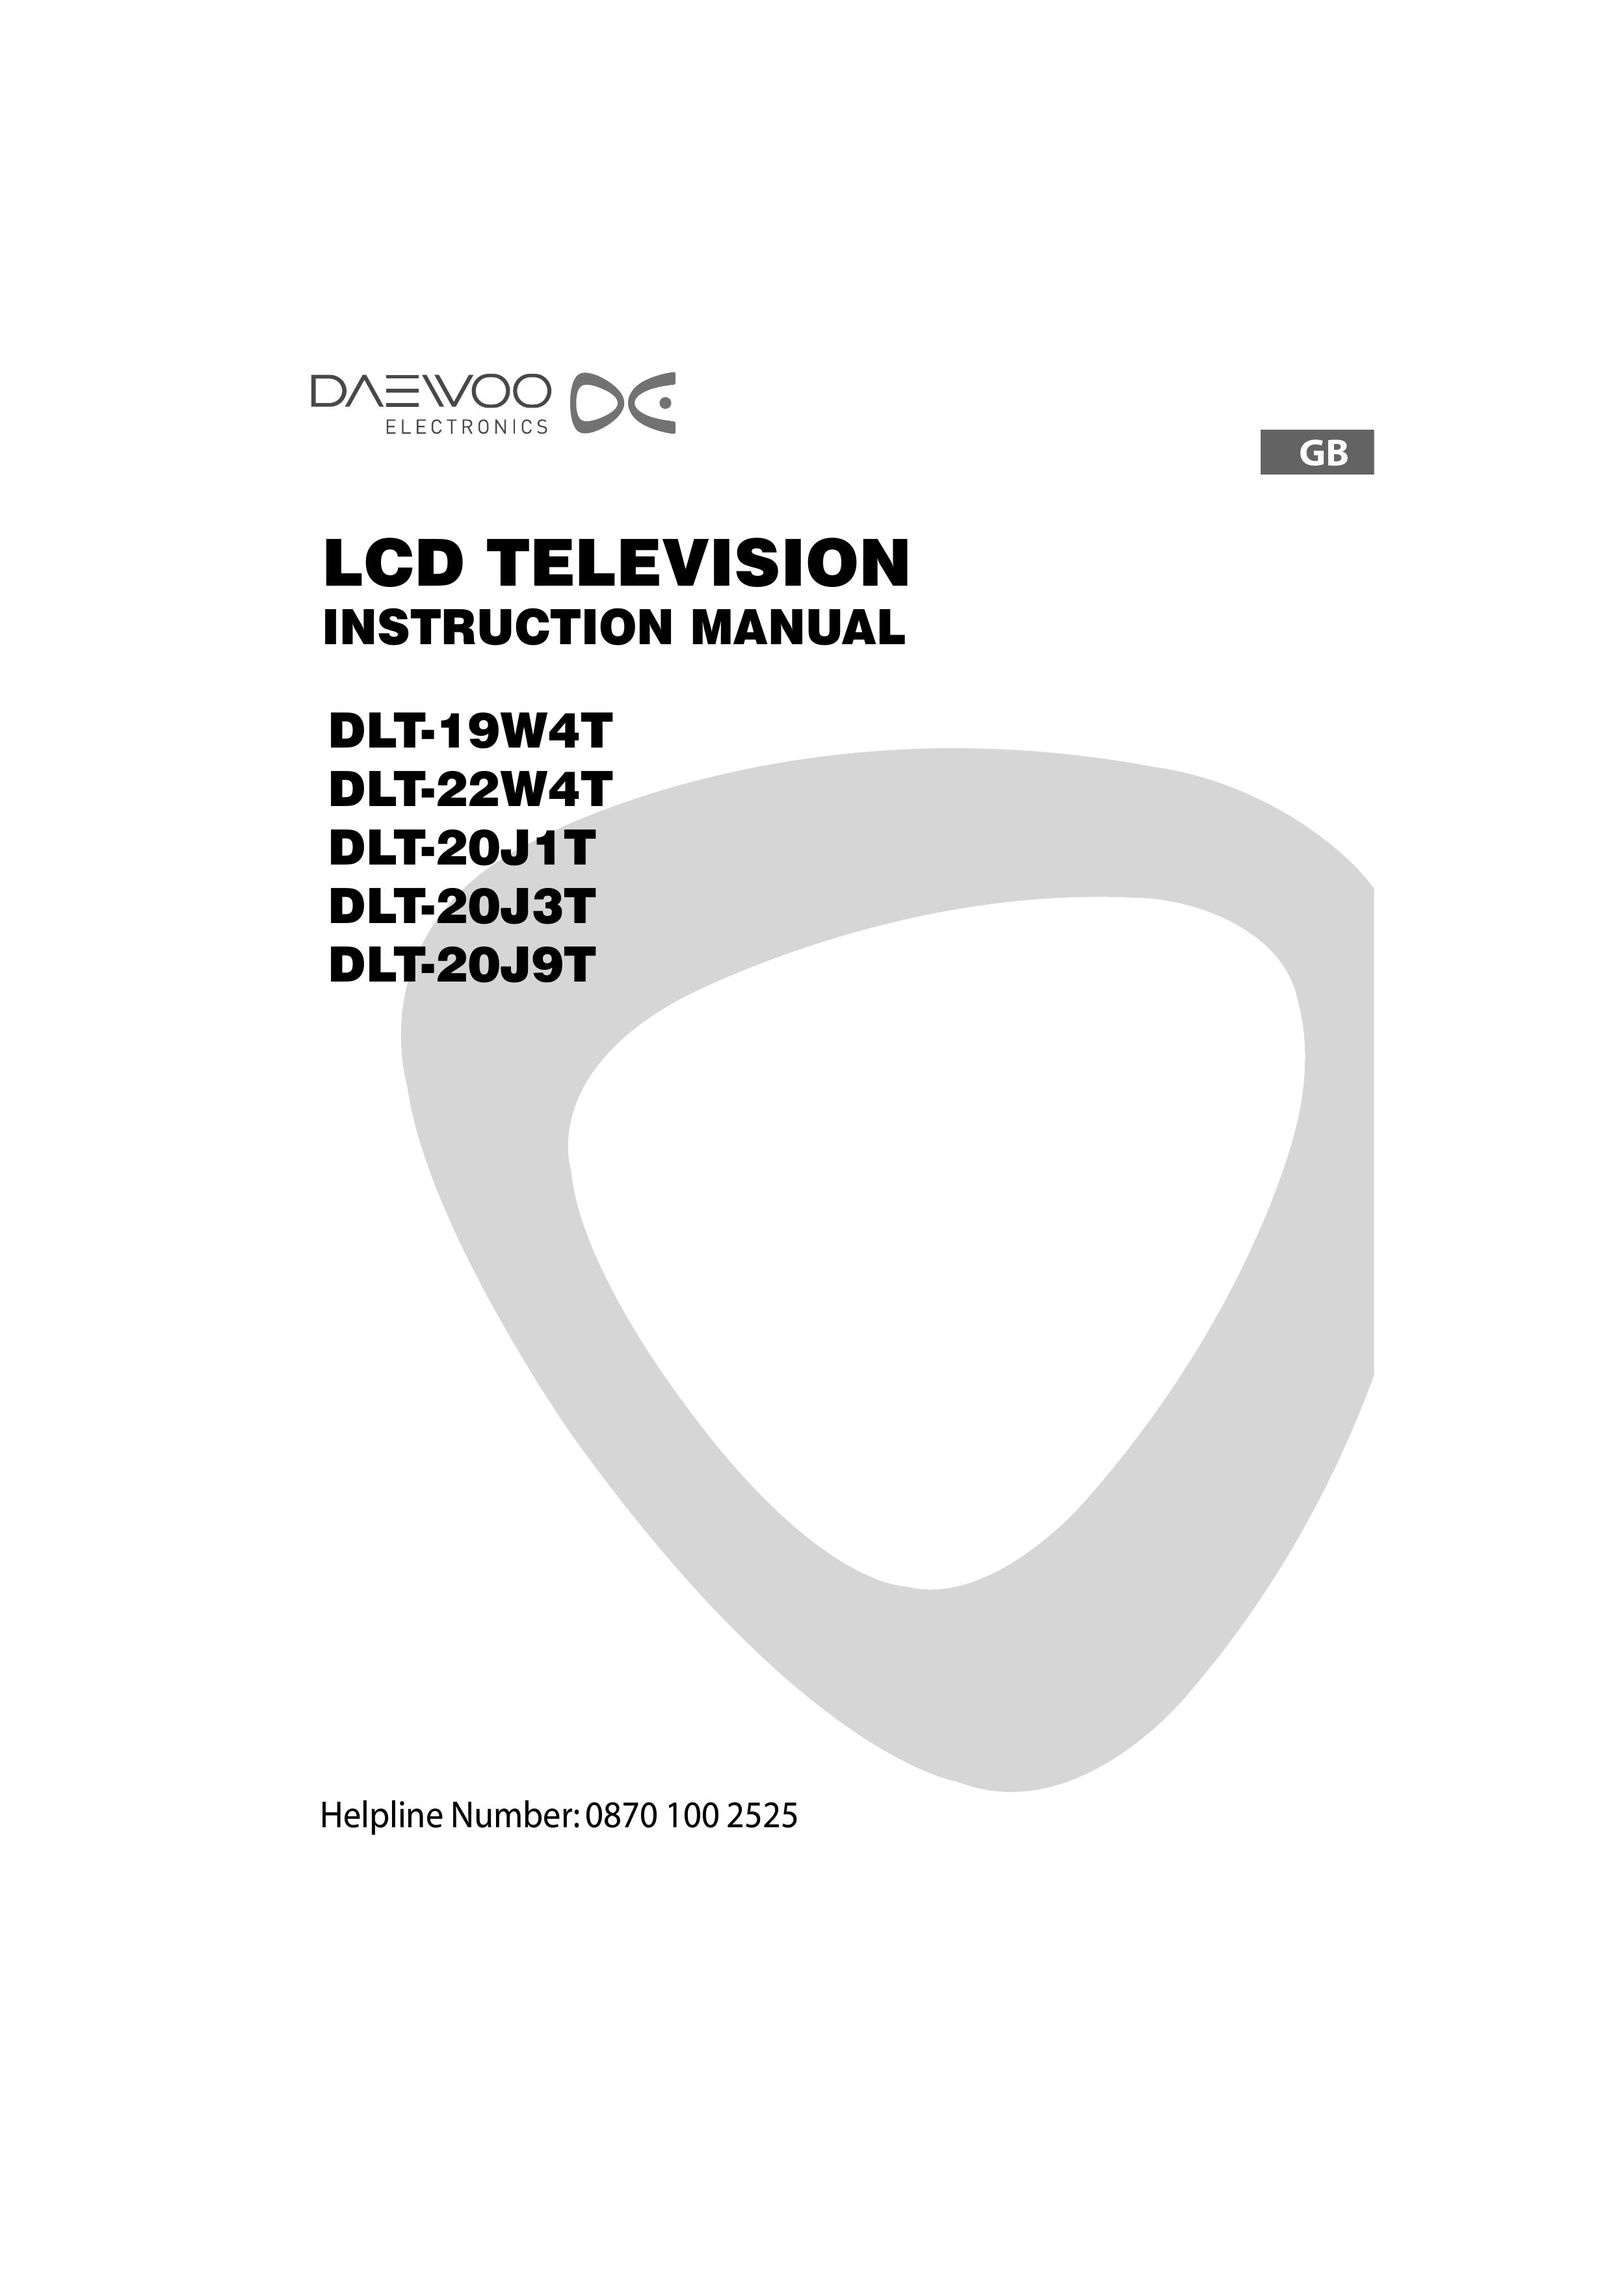 Daewoo DLT-20J9T Flat Panel Television User Manual